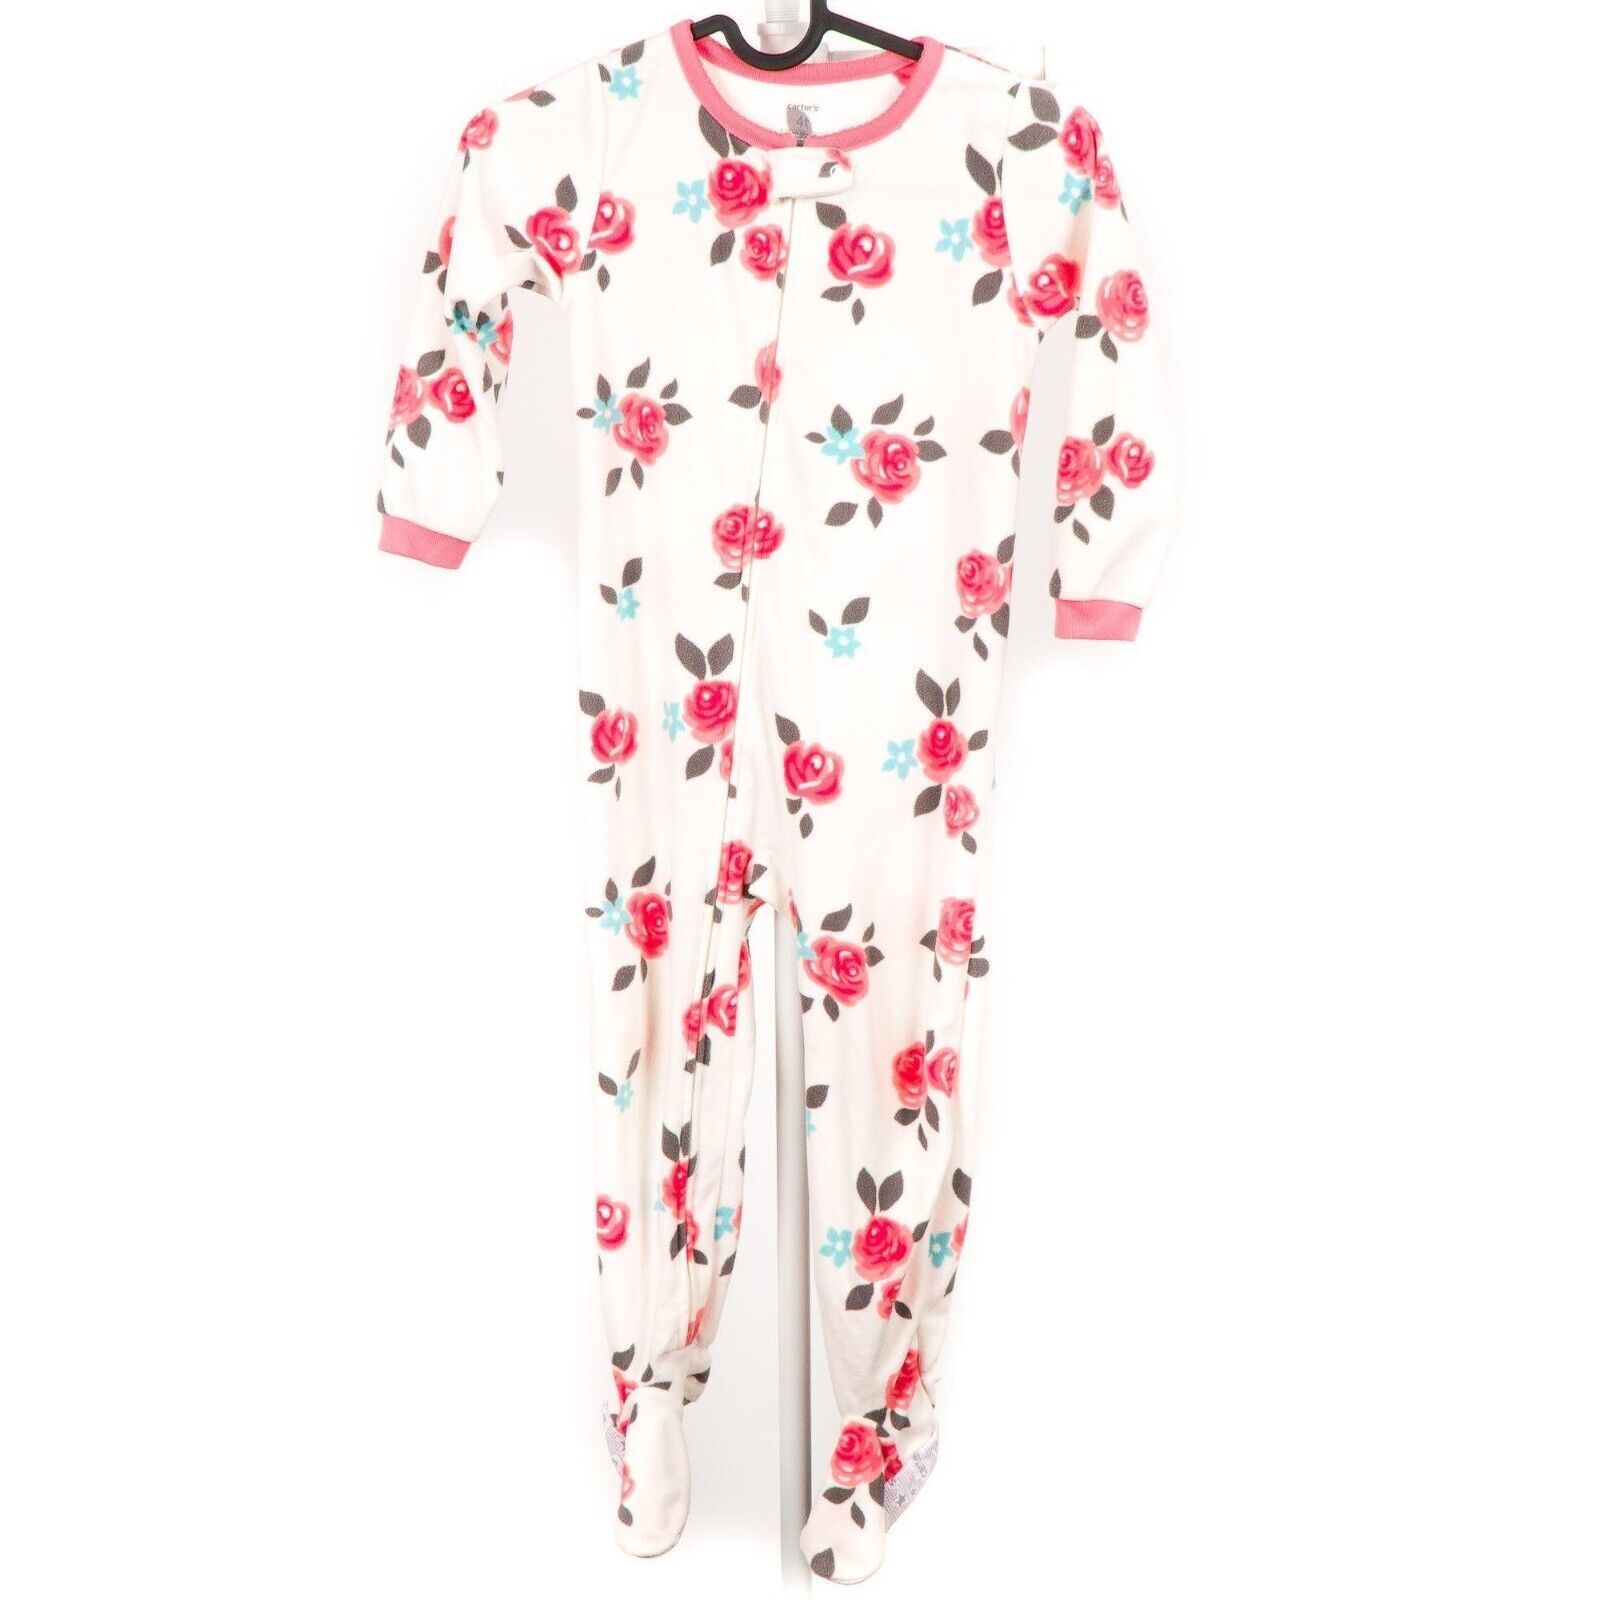 Carters Fleece Footie Pajamas 4T Girls Rose Floral White Pink Winter PJs - $19.66